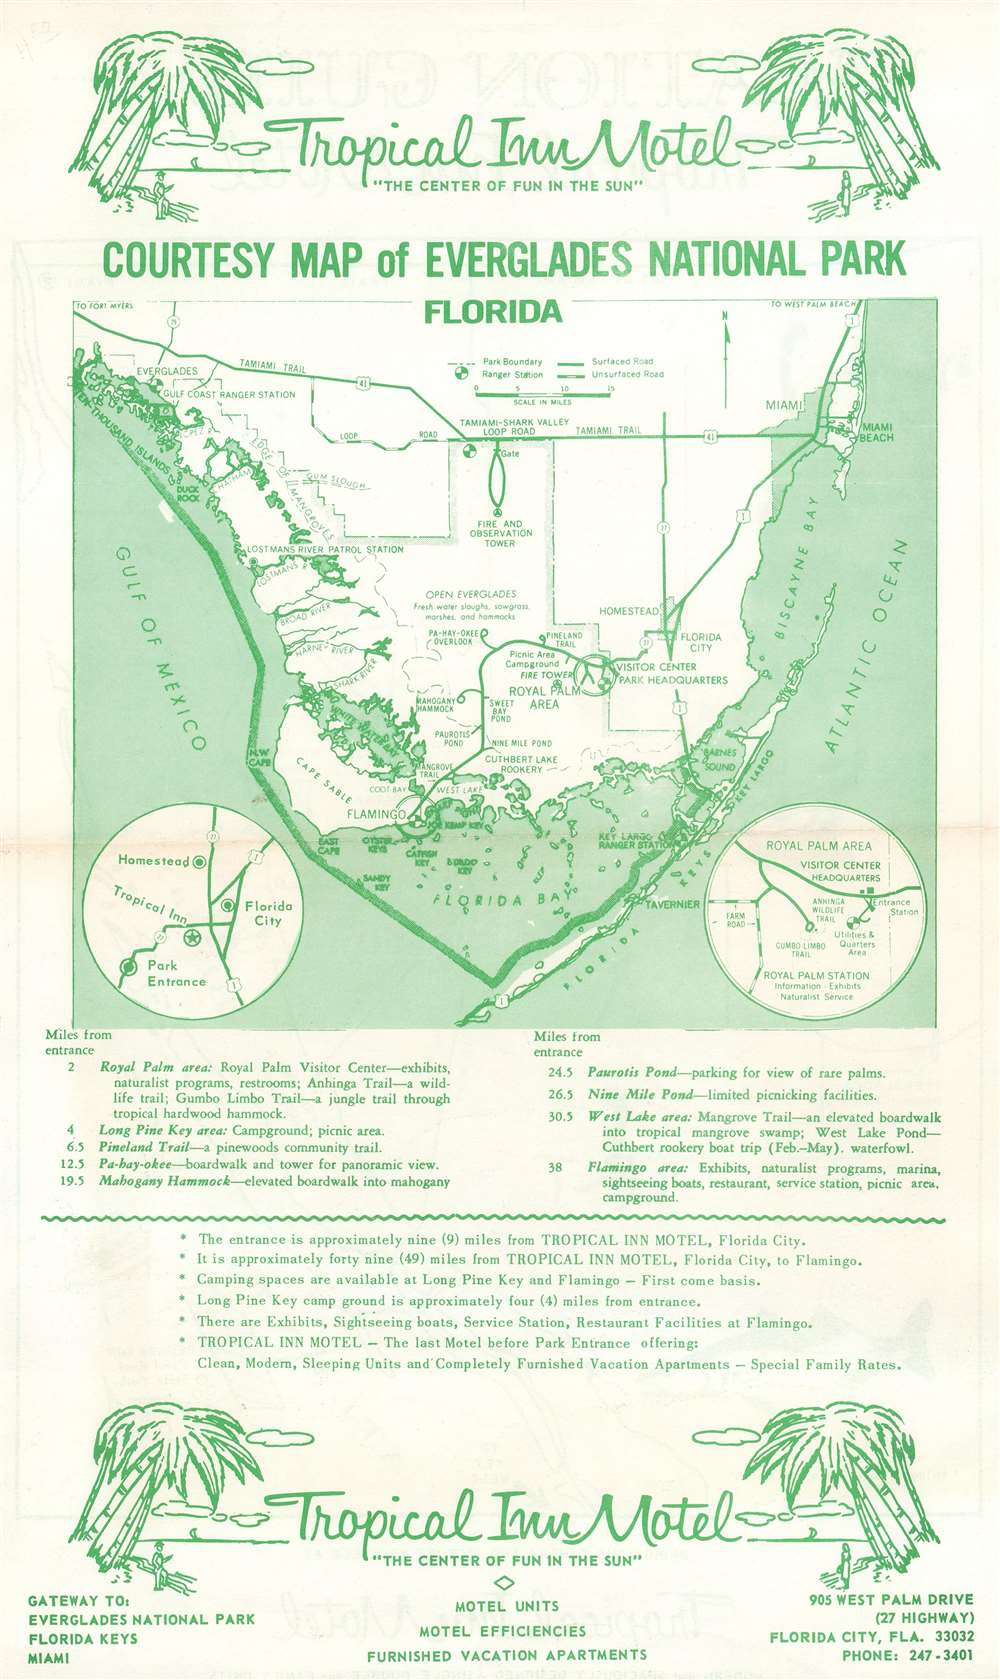 Tropical Inn Motel. Courtesy Map of Everglades National Park Florida. - Main View